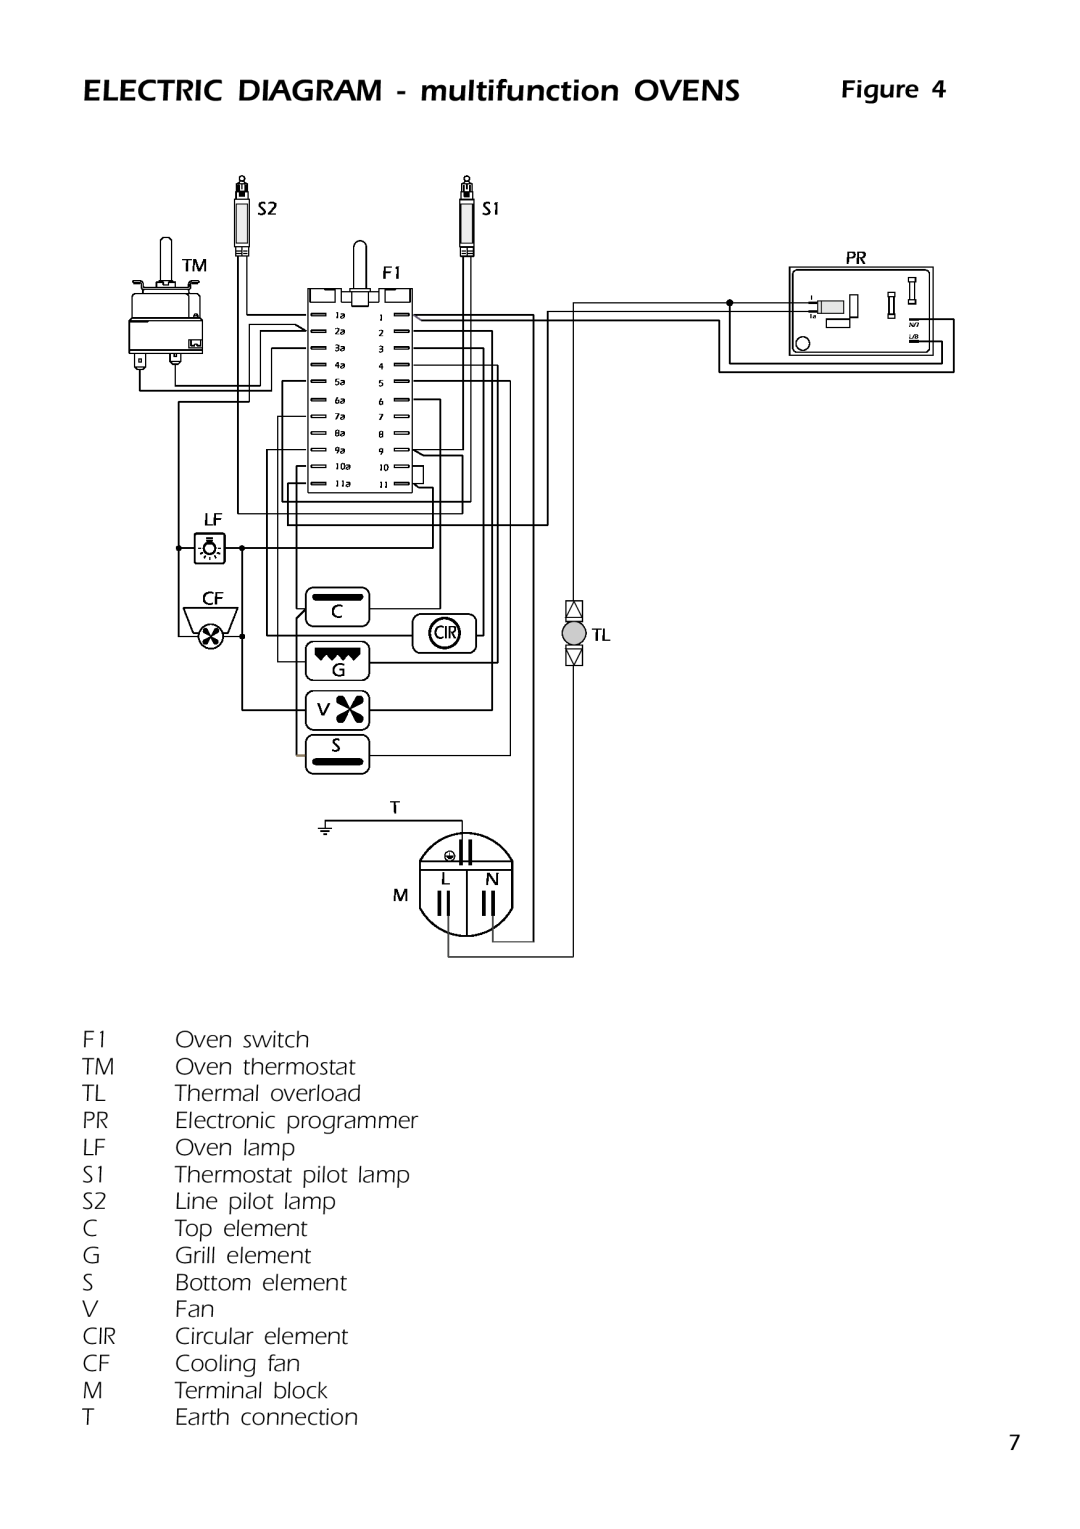 DeLonghi DMFPSII manual ELECTRIC DIAGRAM - multifunction OVENS 